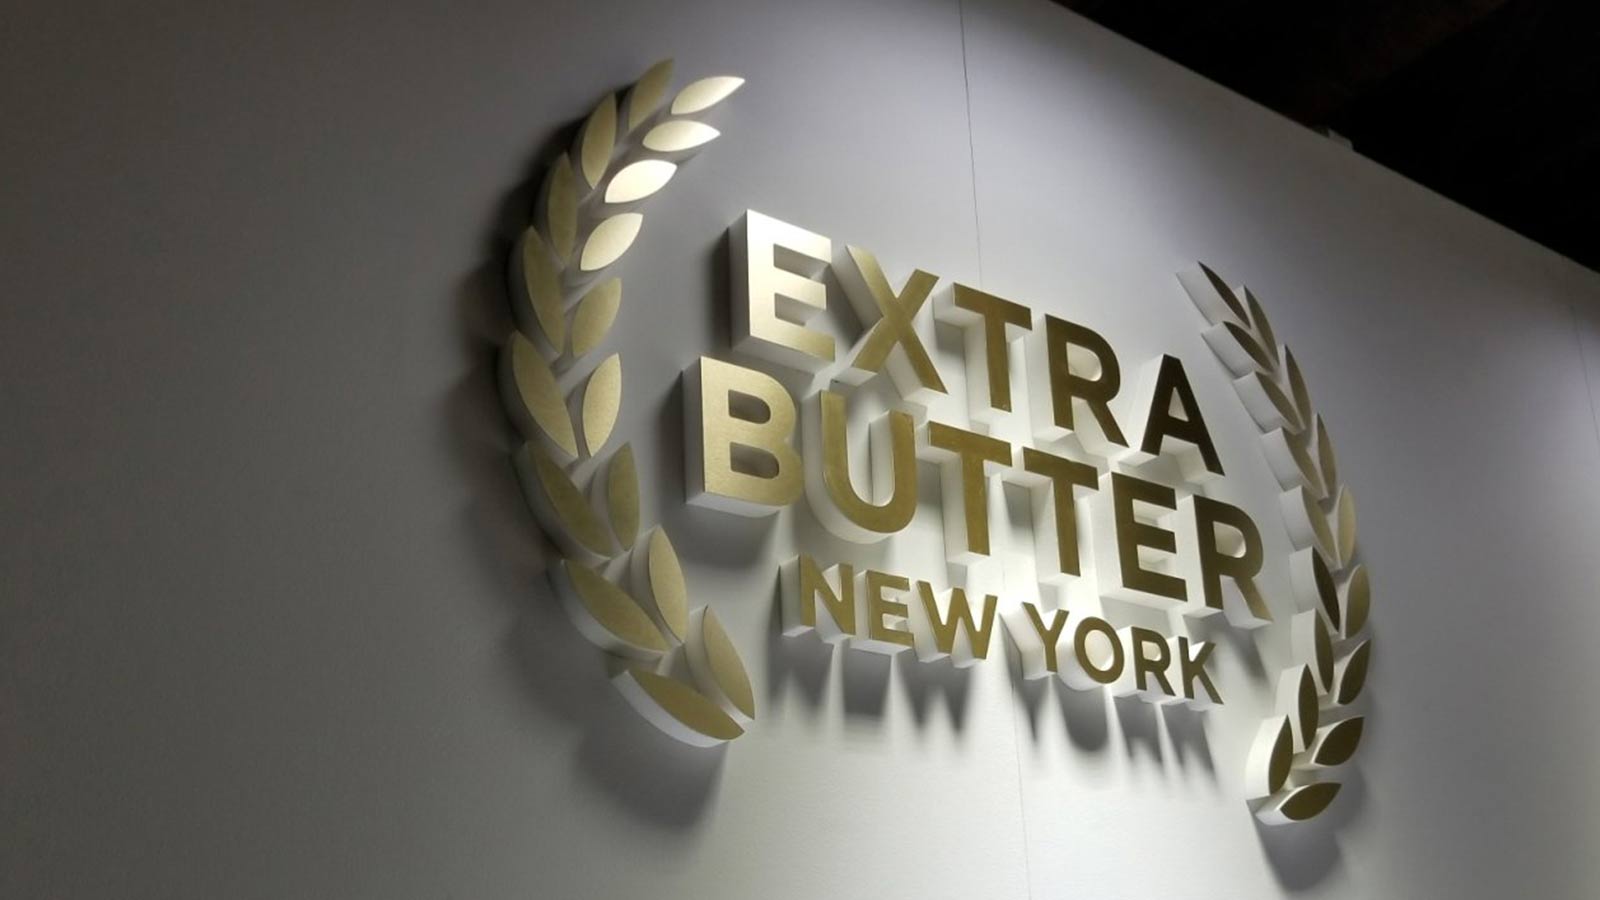 extra butter interior ultraboard sign